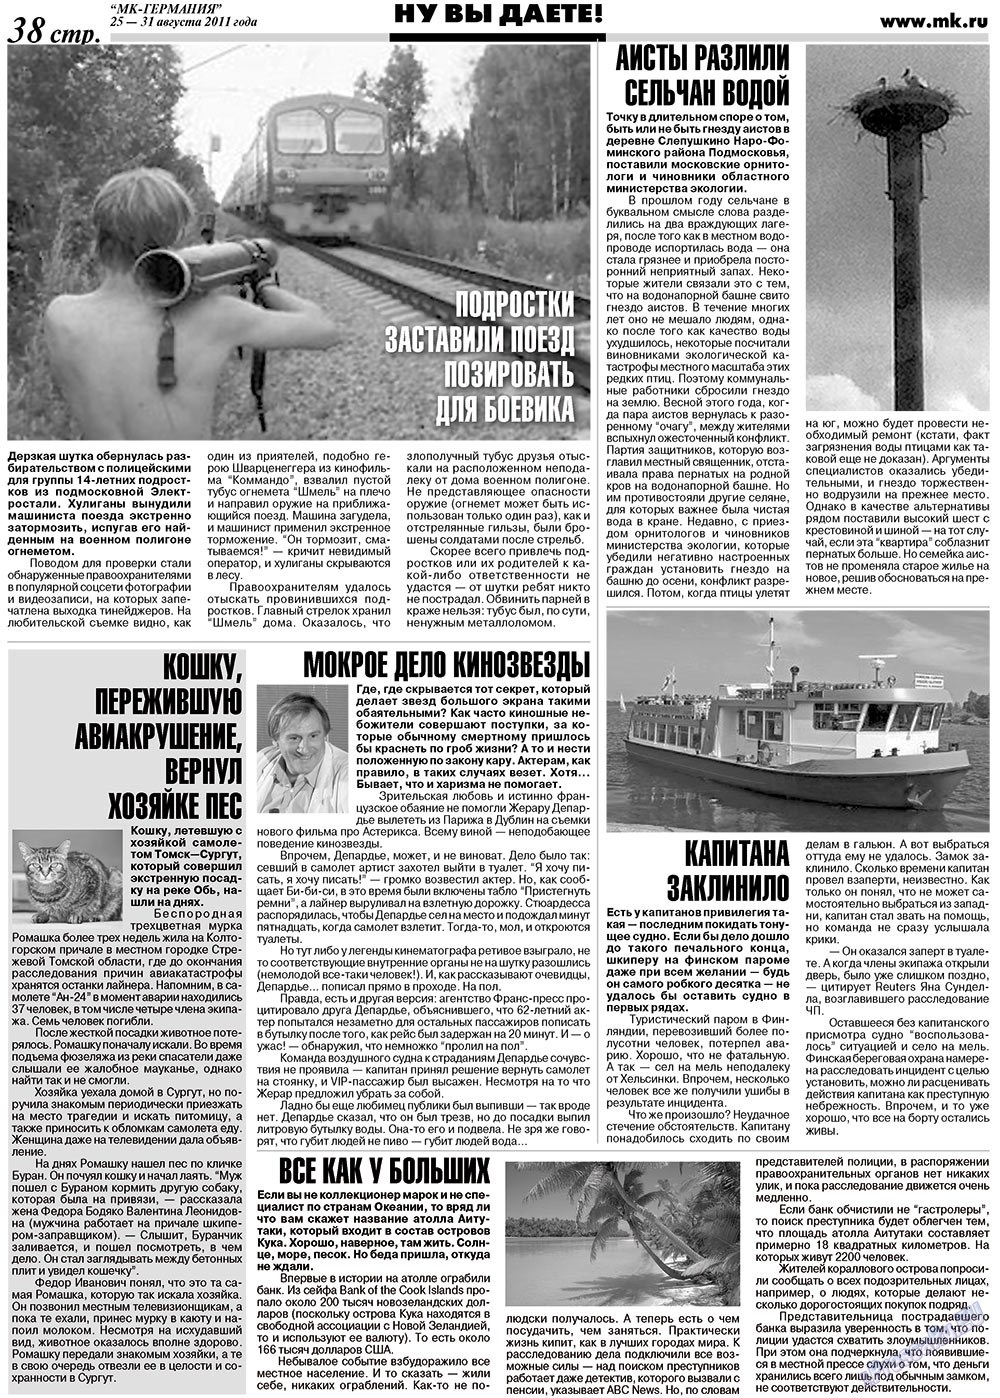 МК-Германия, газета. 2011 №34 стр.38